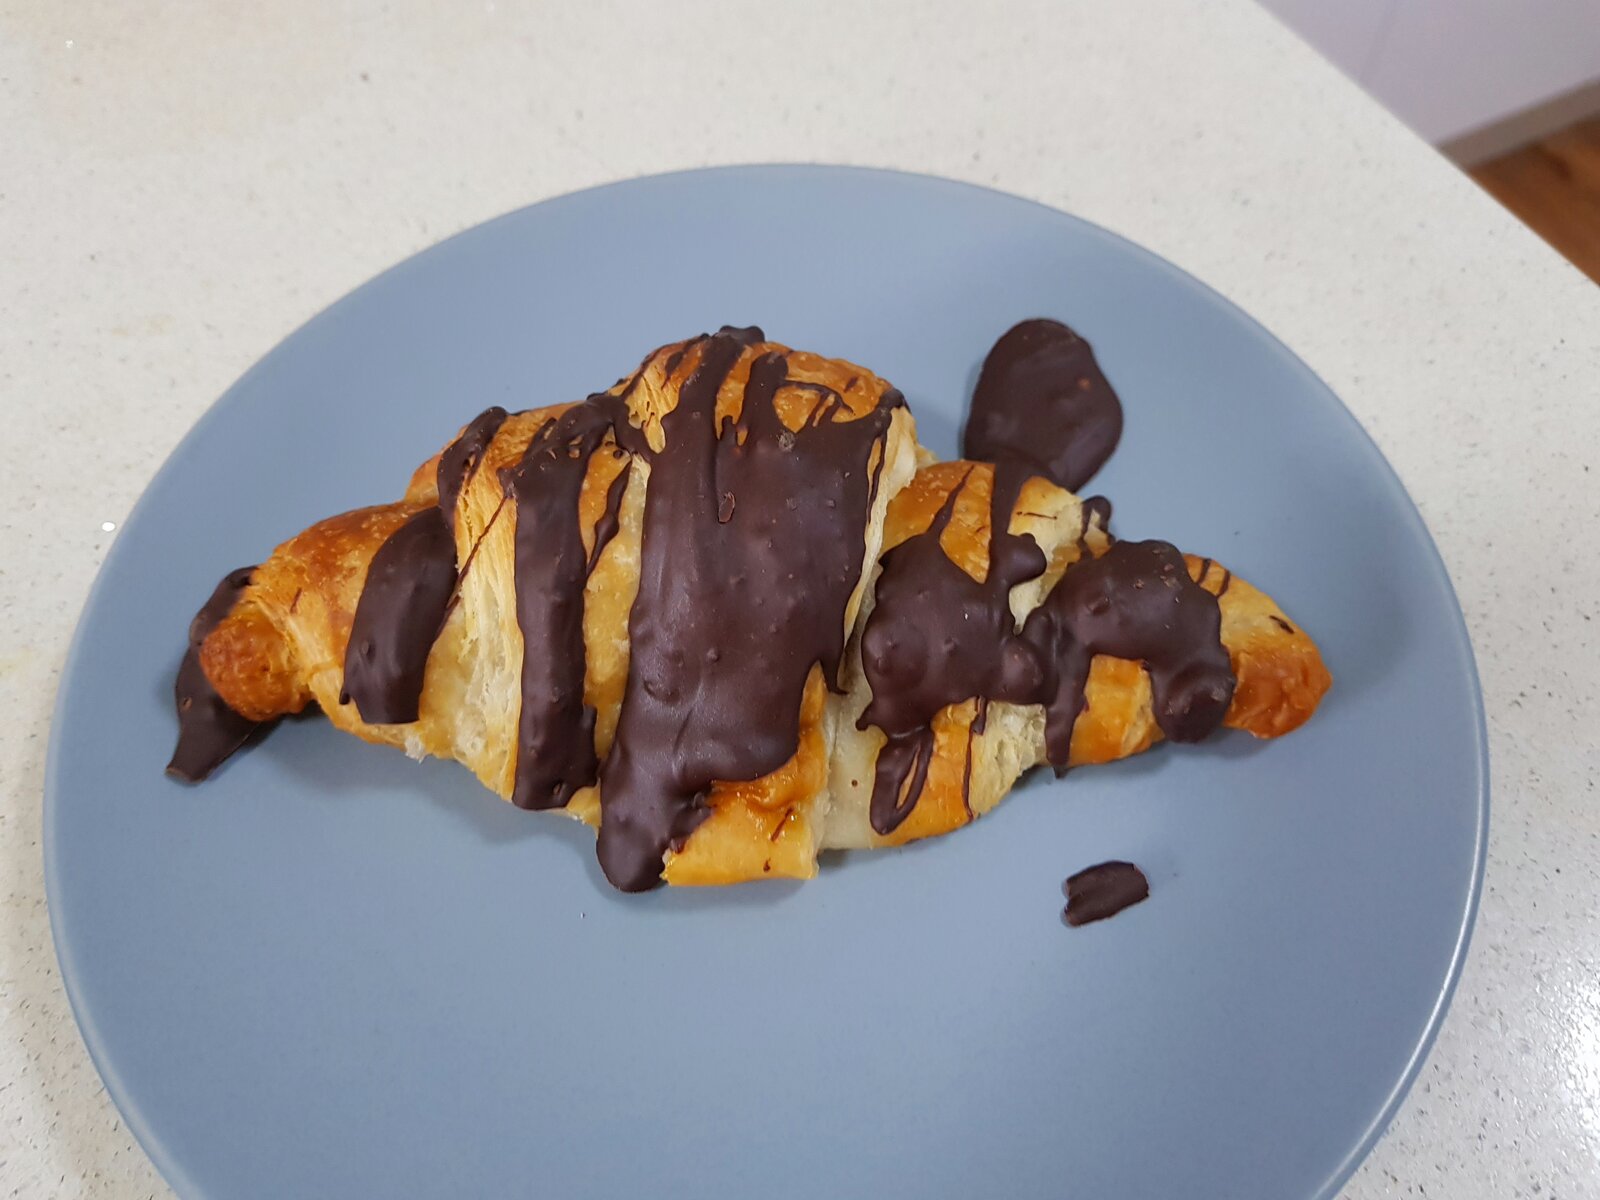 A slightly battered vegan chocolate croissant